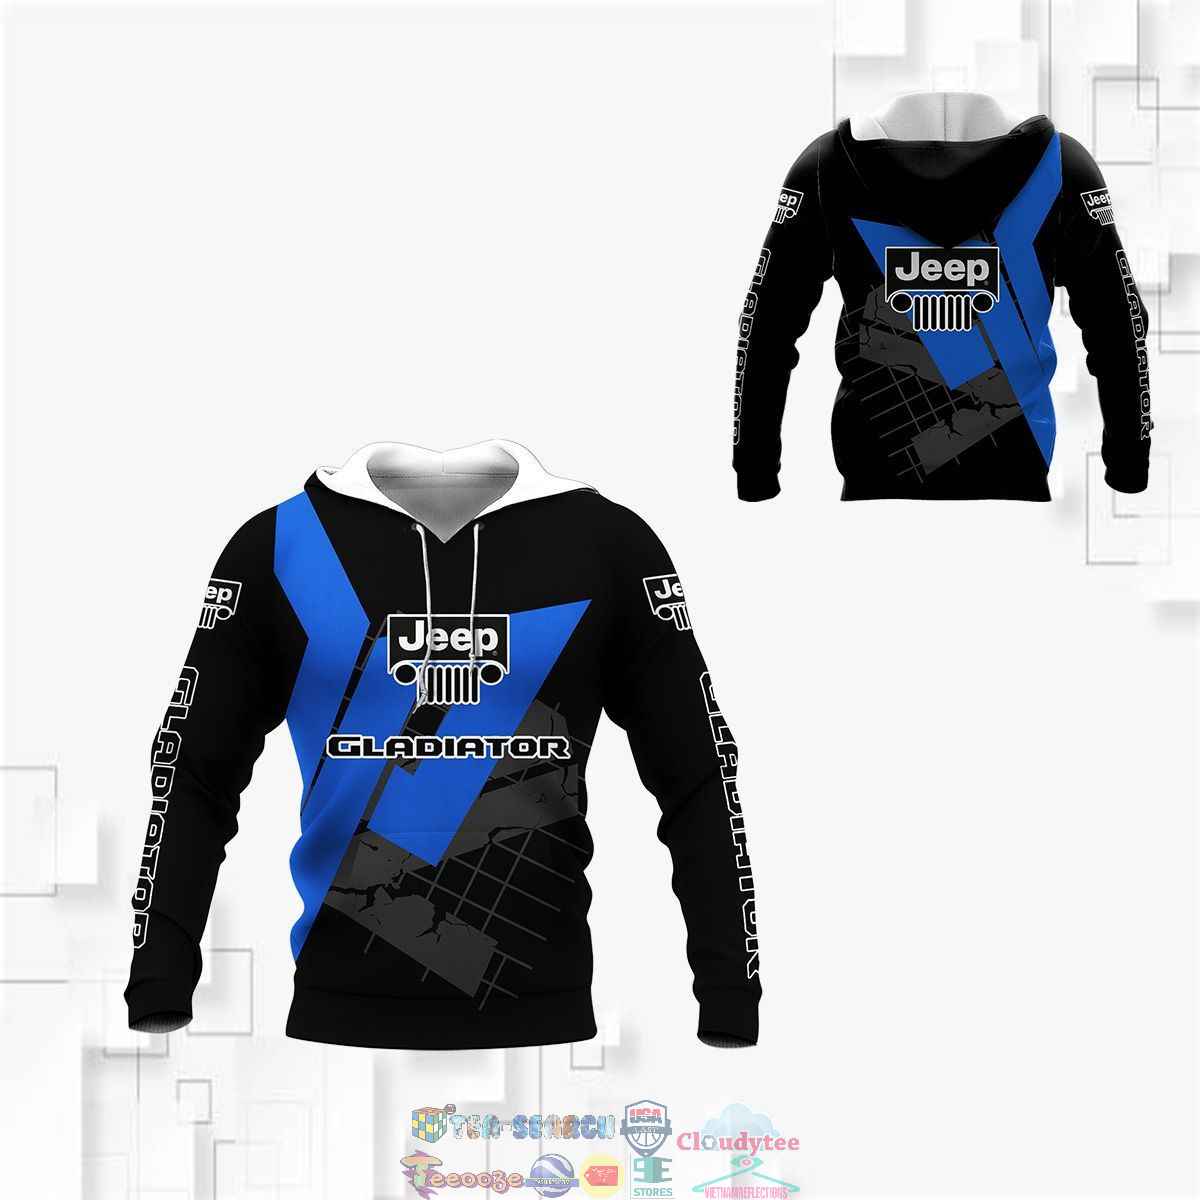 MmHqHbHP-TH100822-53xxxJeep-Gladiator-ver-6-3D-hoodie-and-t-shirt3.jpg